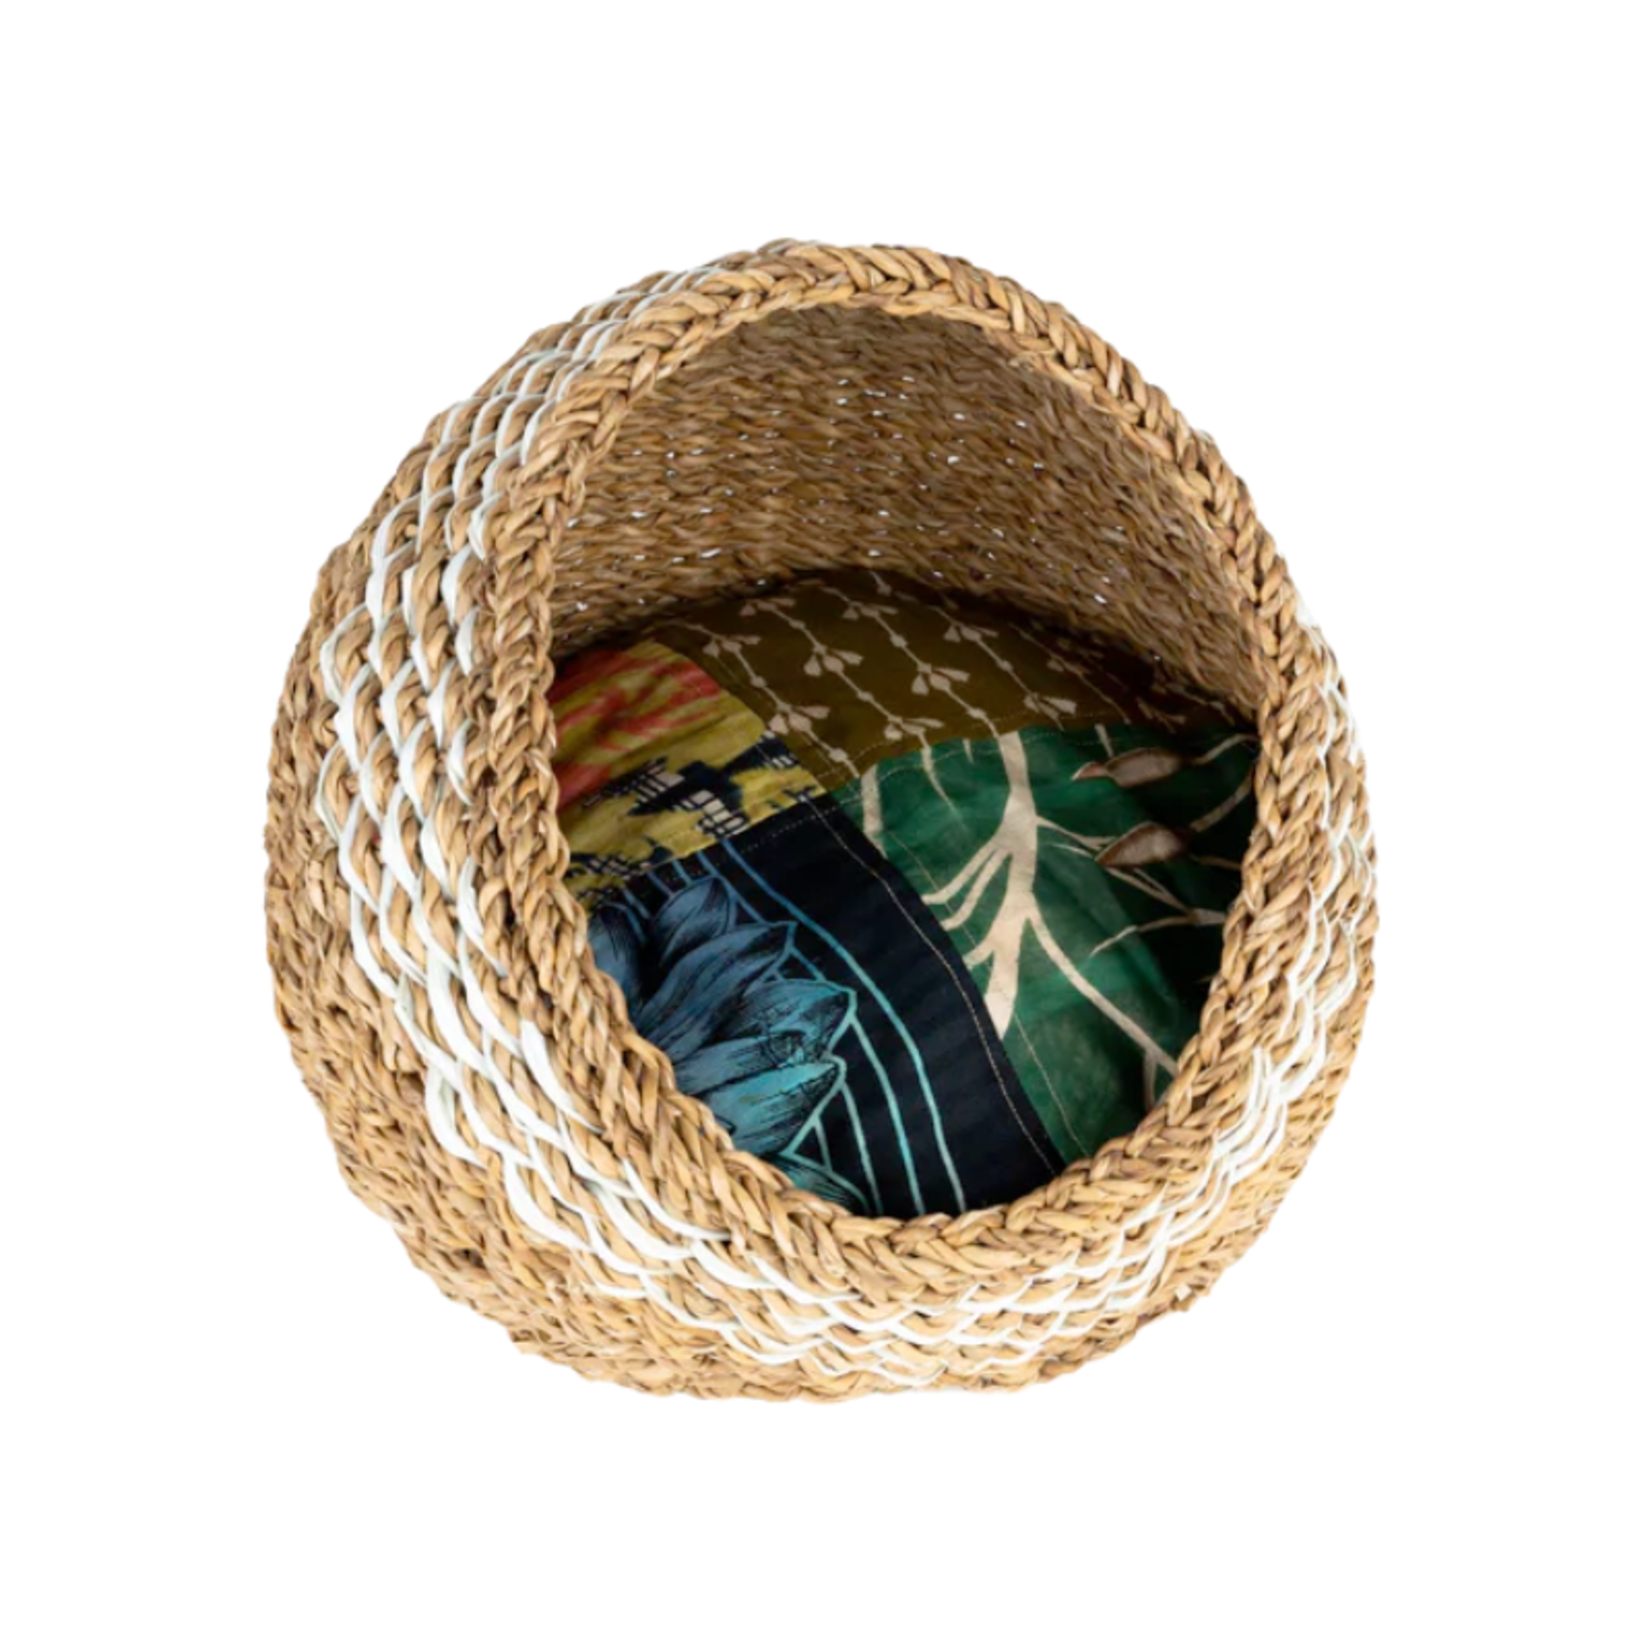 Recycled Sari Cat Bed Basket - Handmade in Bangladesh - Ten Thousand Villages